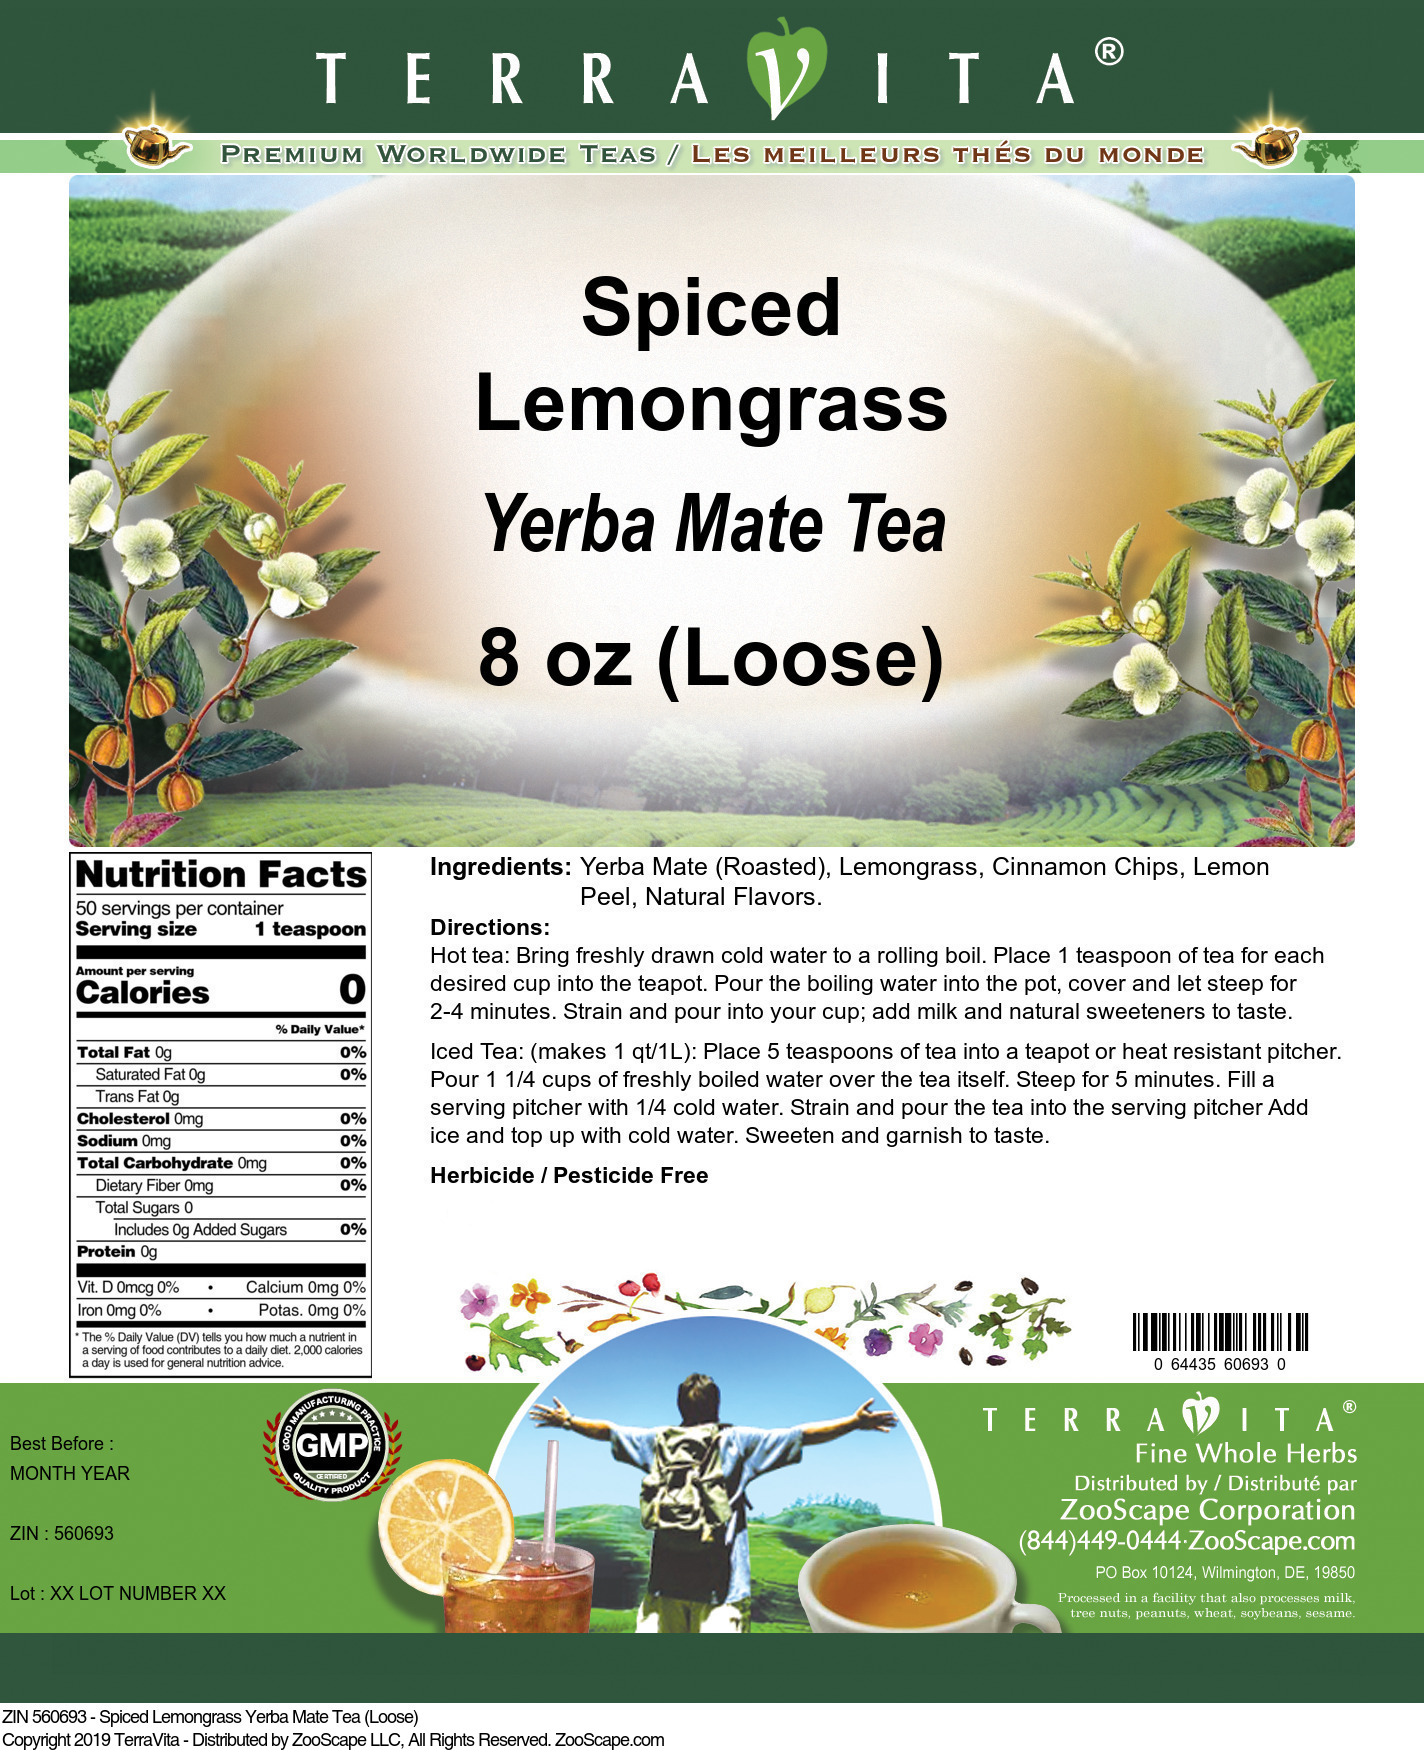 Spiced Lemongrass Yerba Mate Tea (Loose) - Label